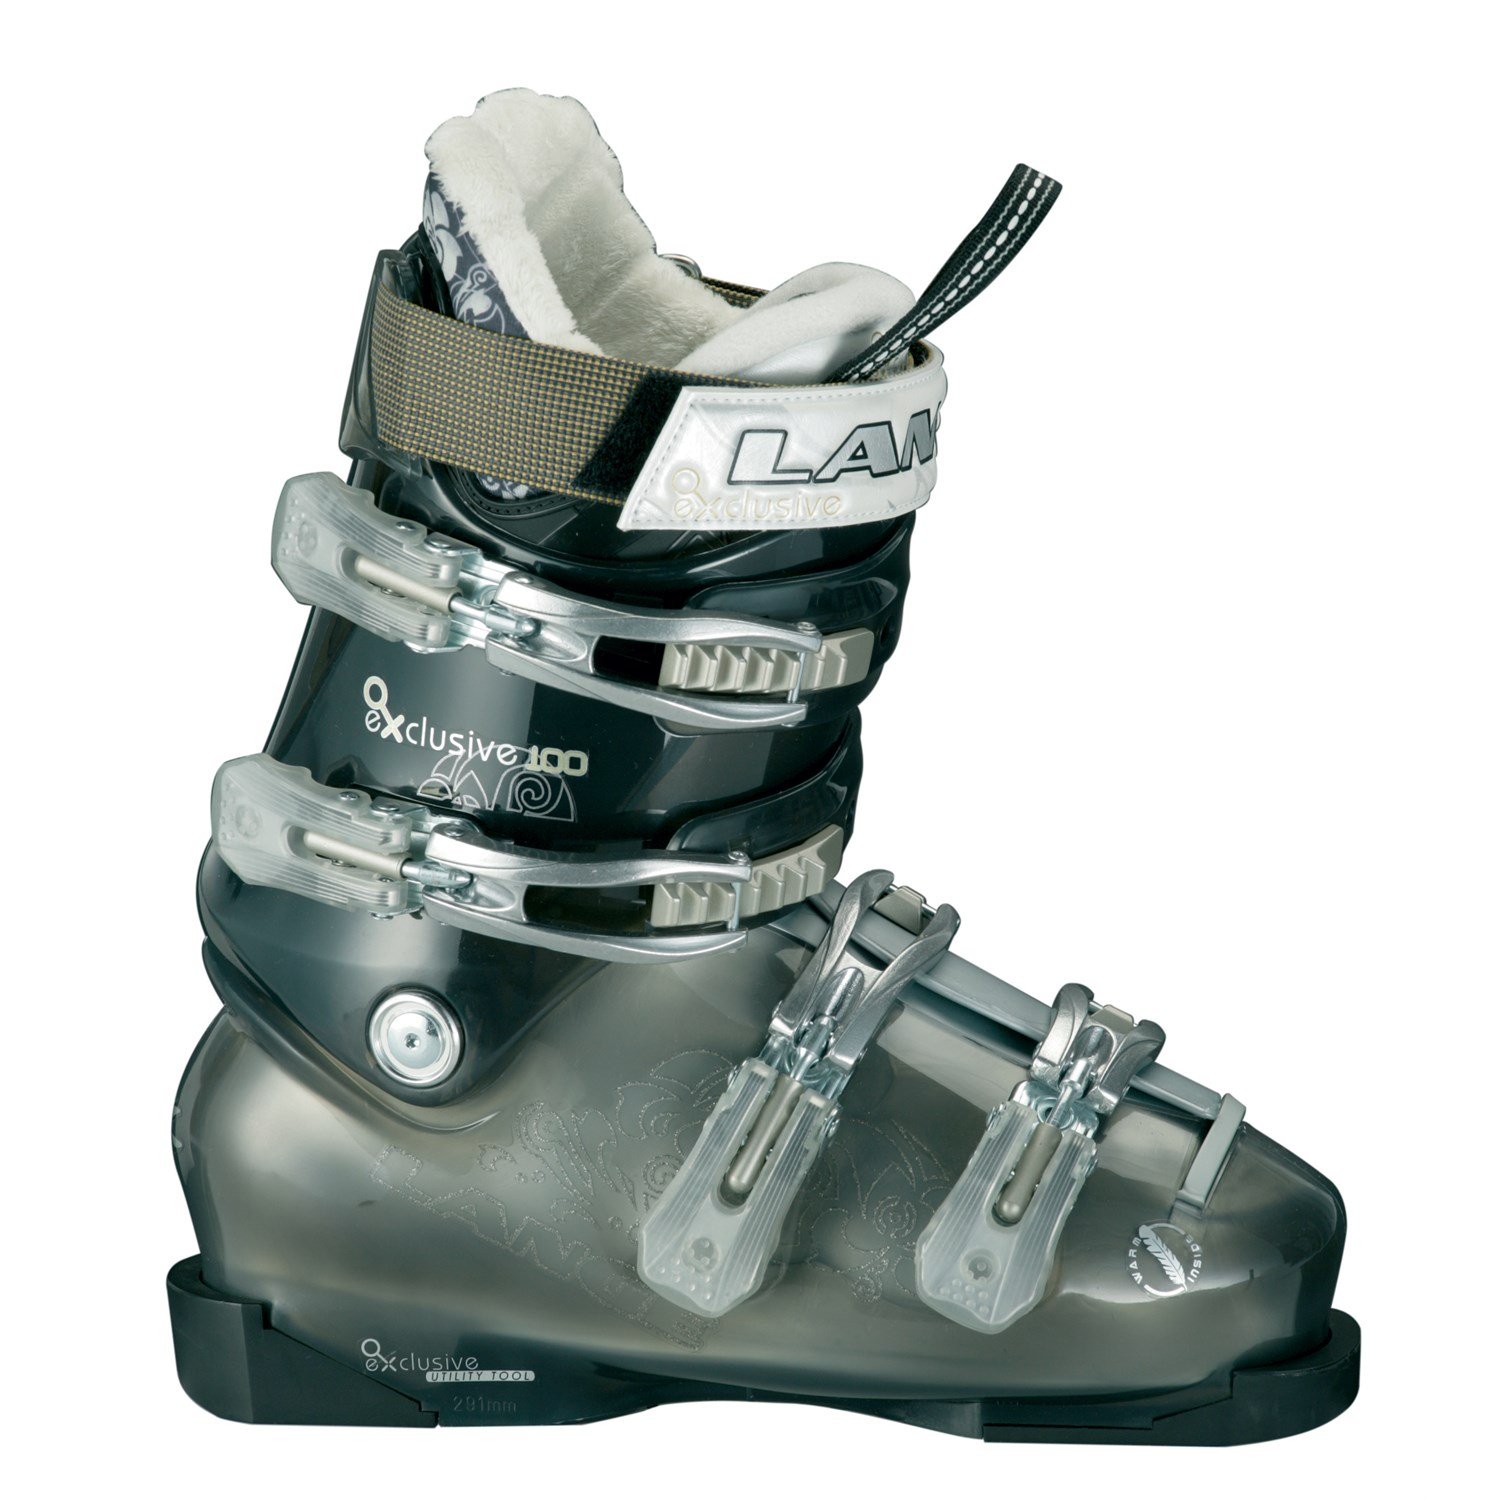 291 mm ski boot size